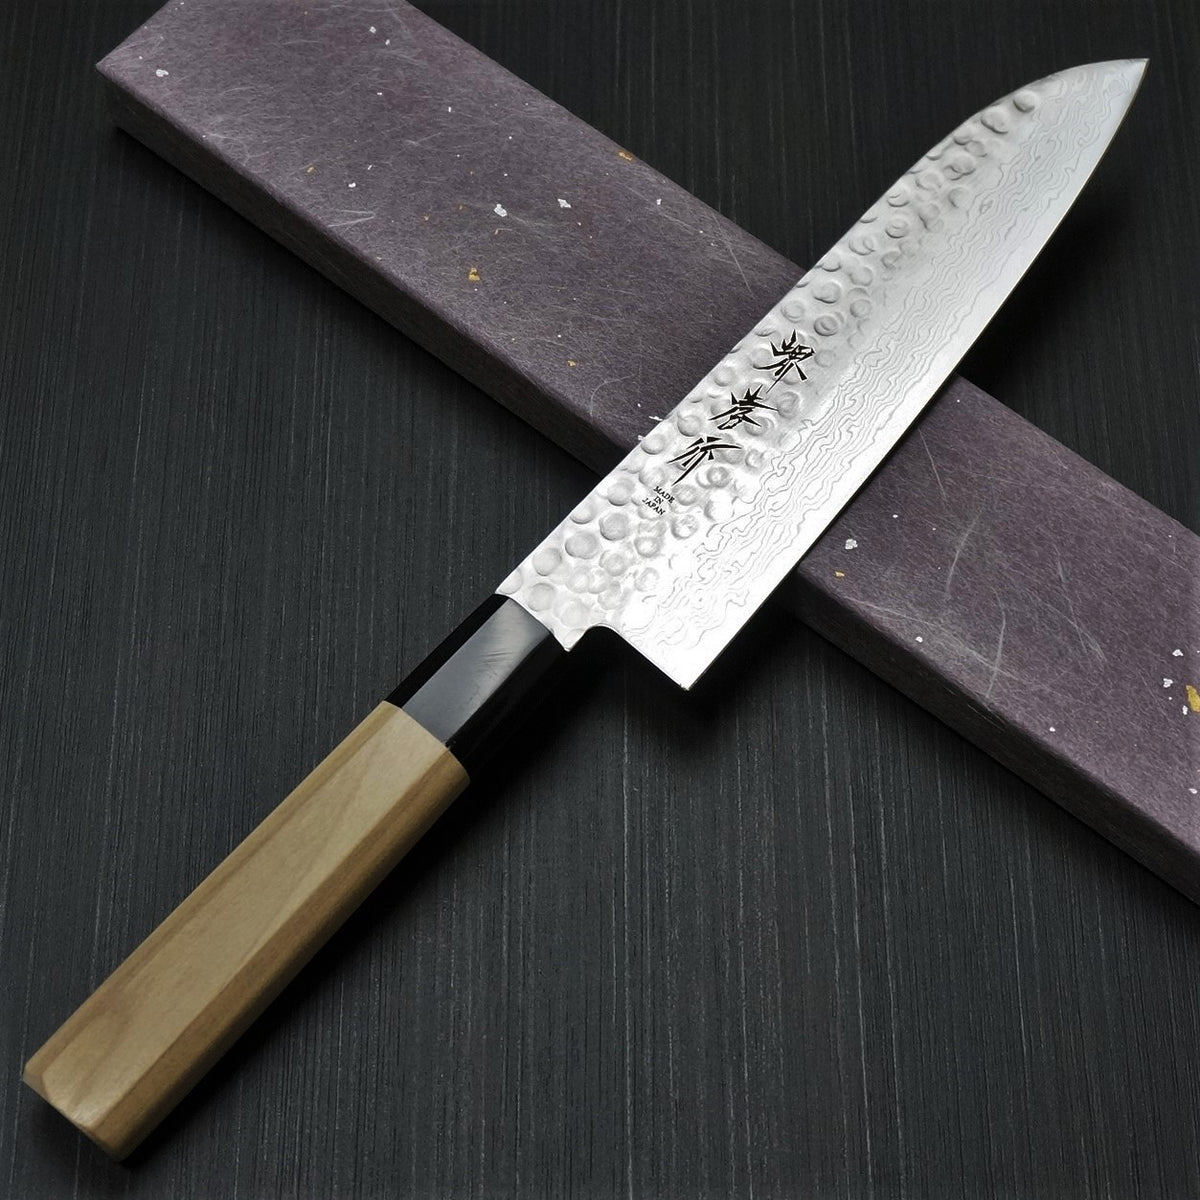 Sakai Takayuki Silver Steel No.3 Damascus Santoku Japanese Knife 180mm